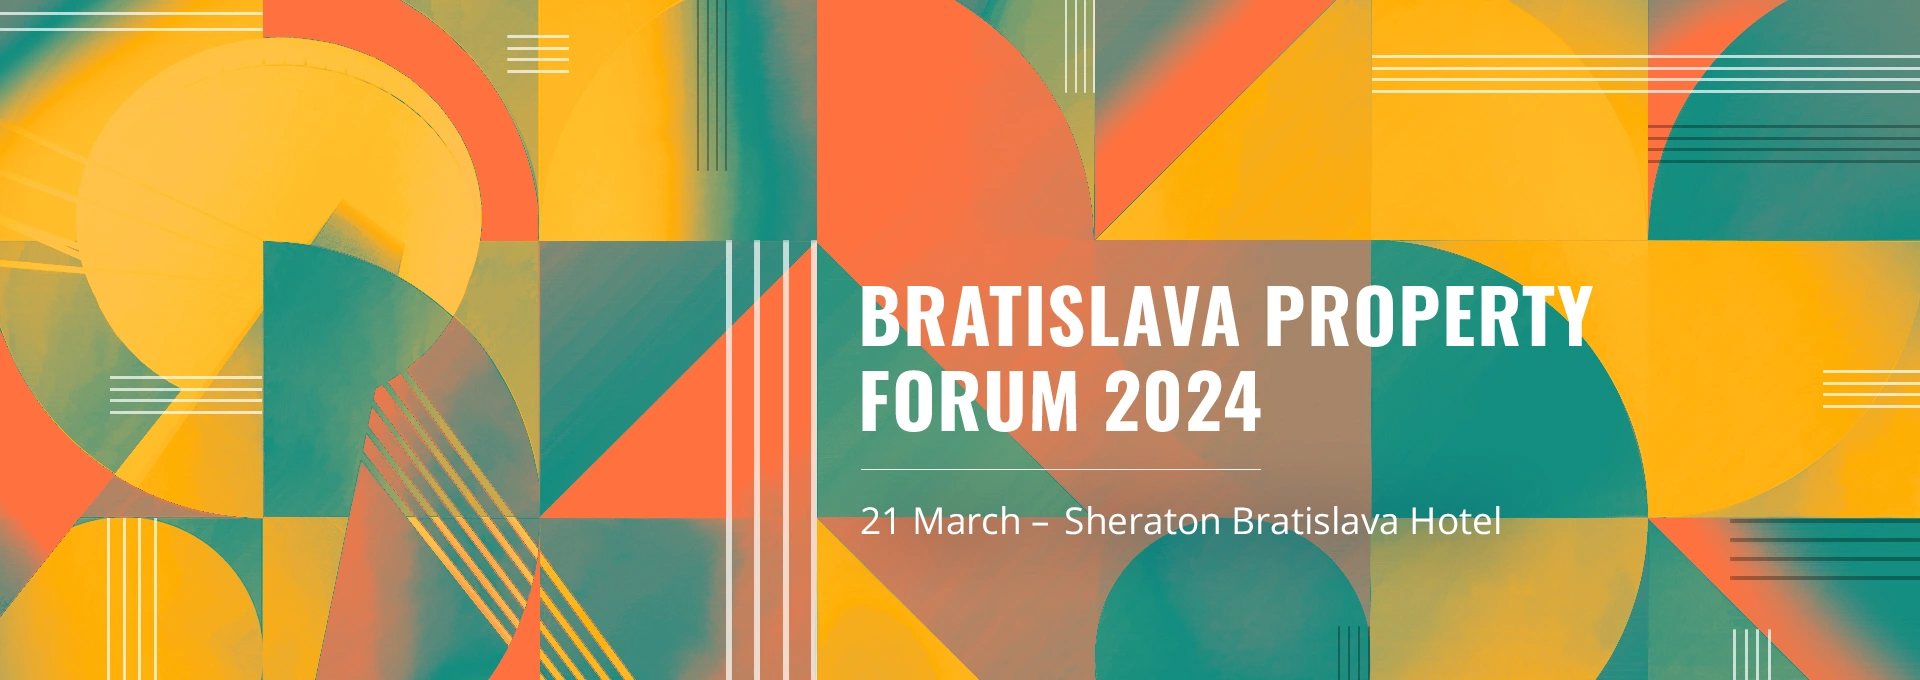 Bratislava Property Forum 2024